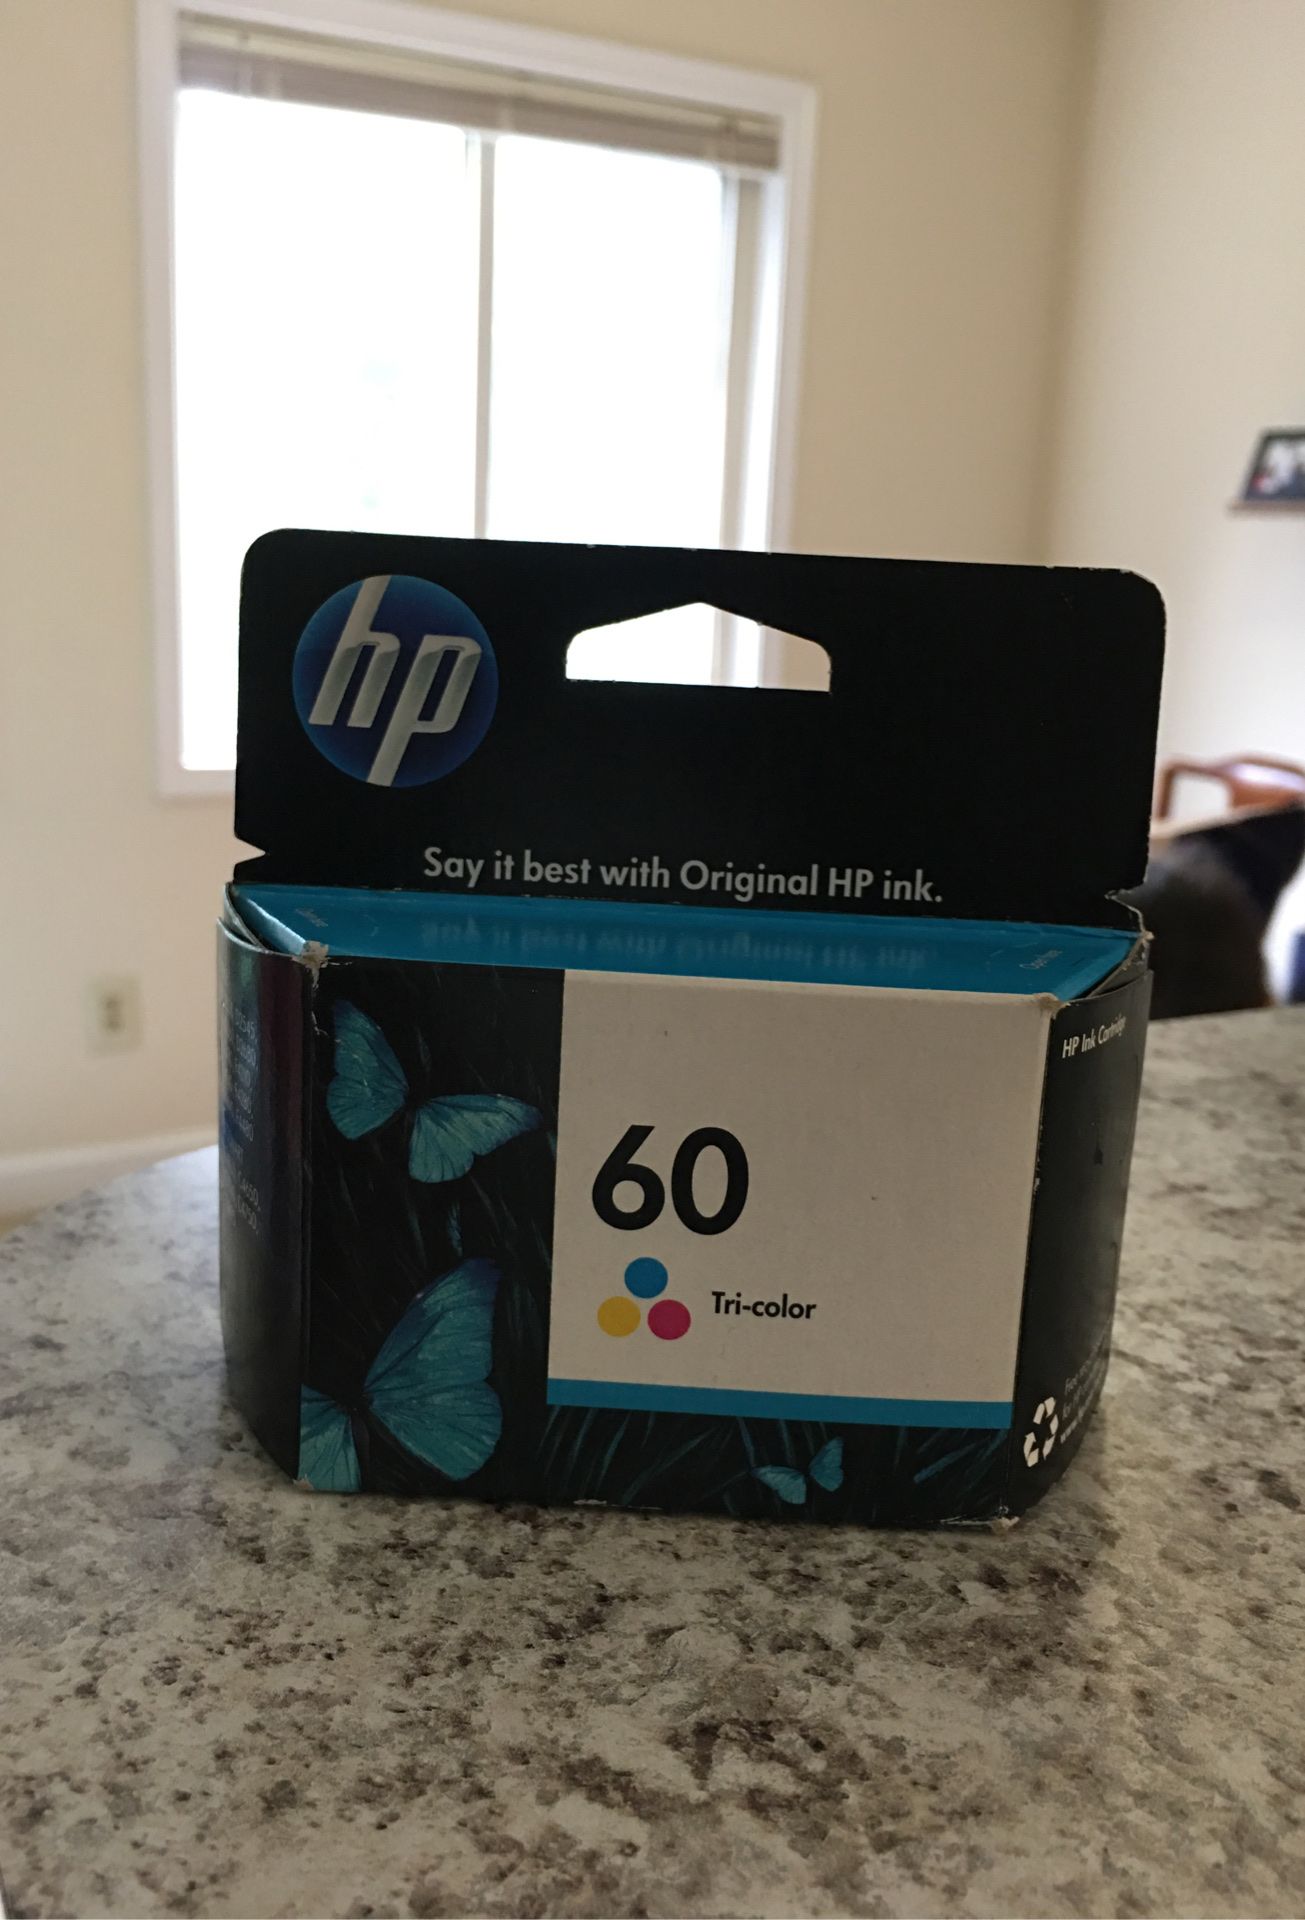 HP ink 60 tri-color